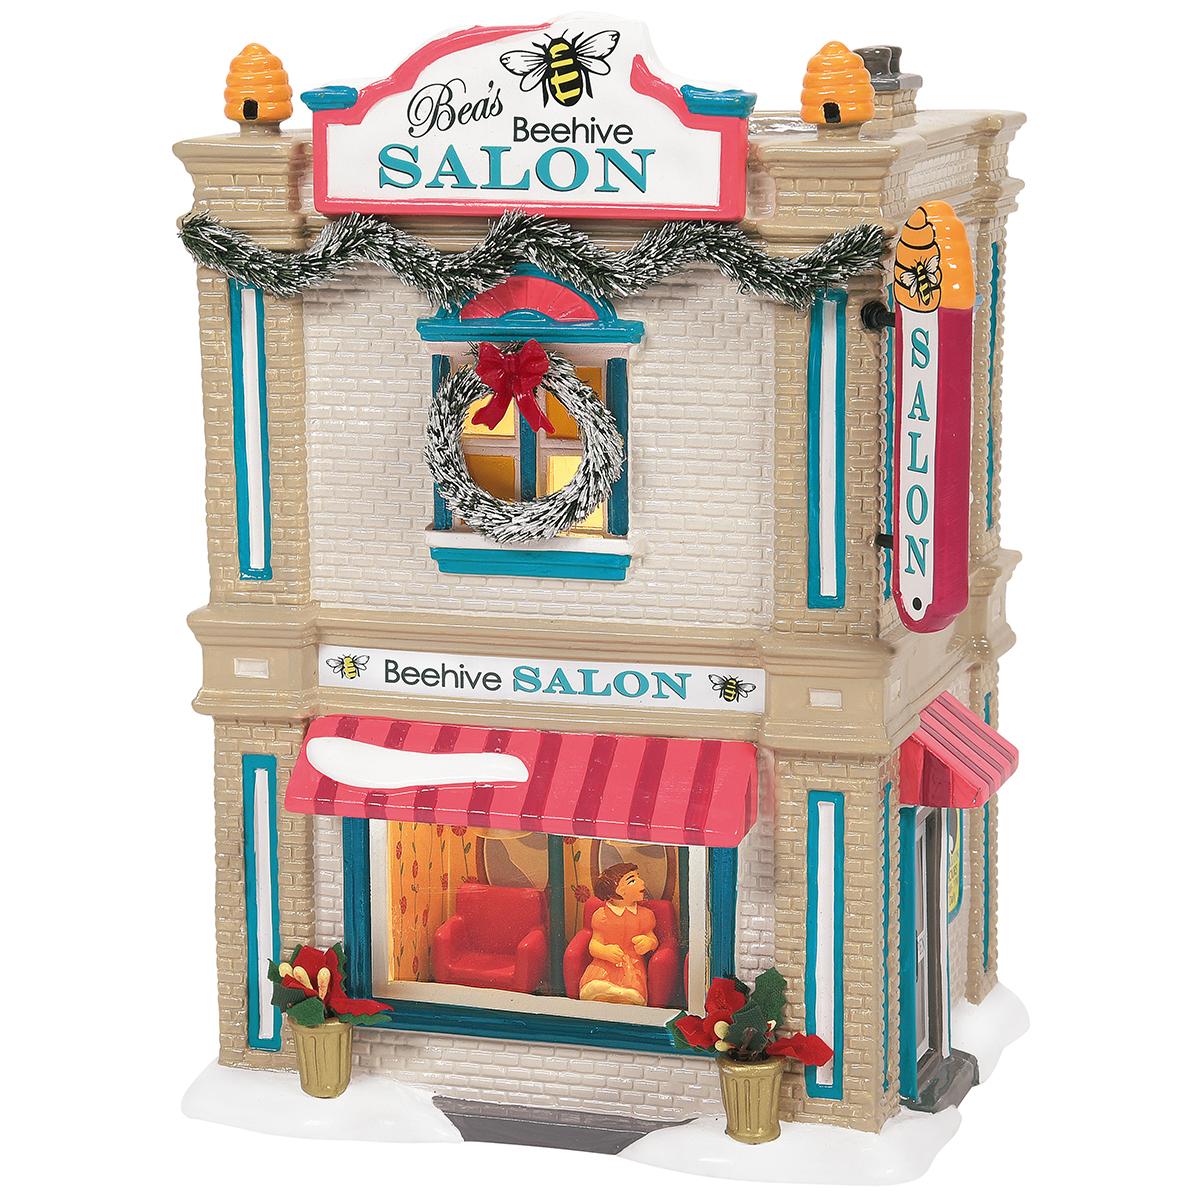 Bea's Beehive Salon